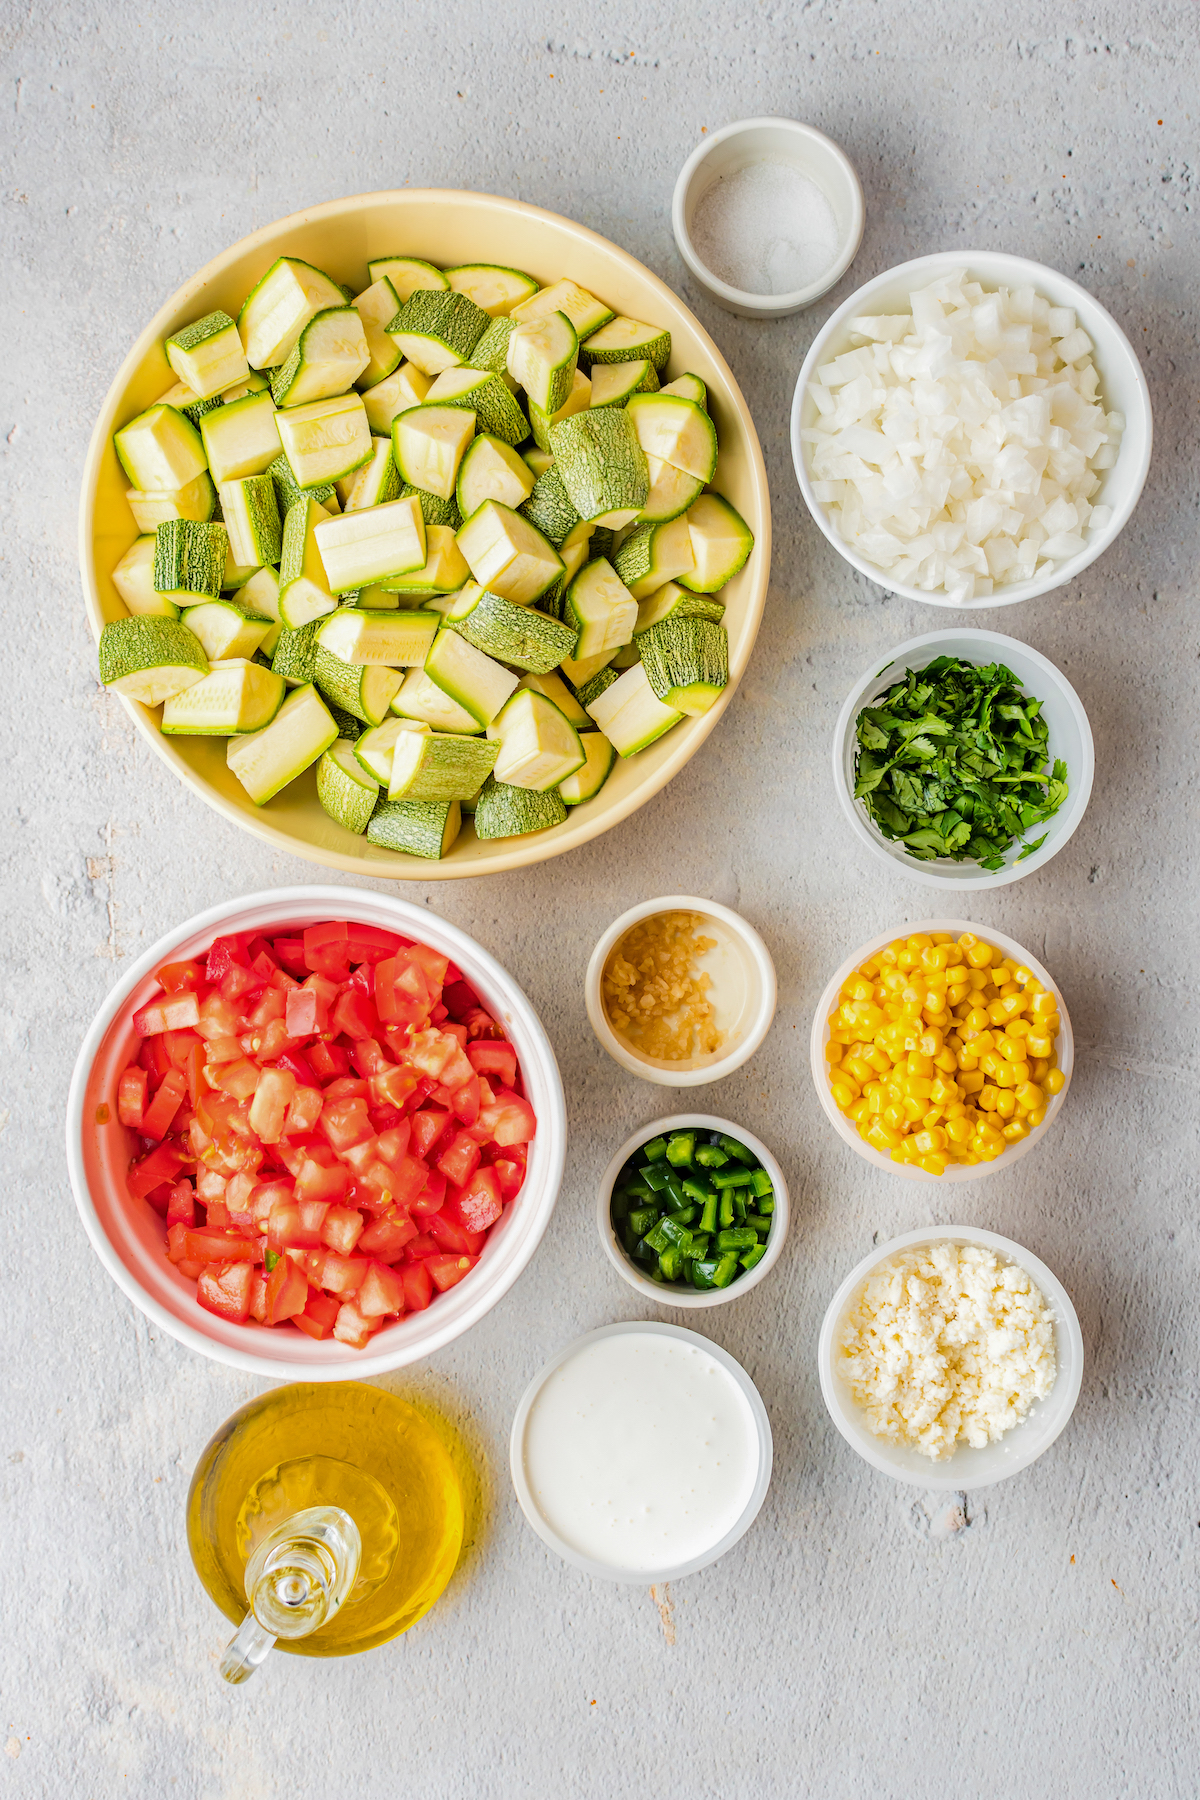 From top: Cubed squash, salt, diced onion, diced tomato, garlic, minced jalapeno, cilantro, corn kernels, olive oil, crema, queso fresco.